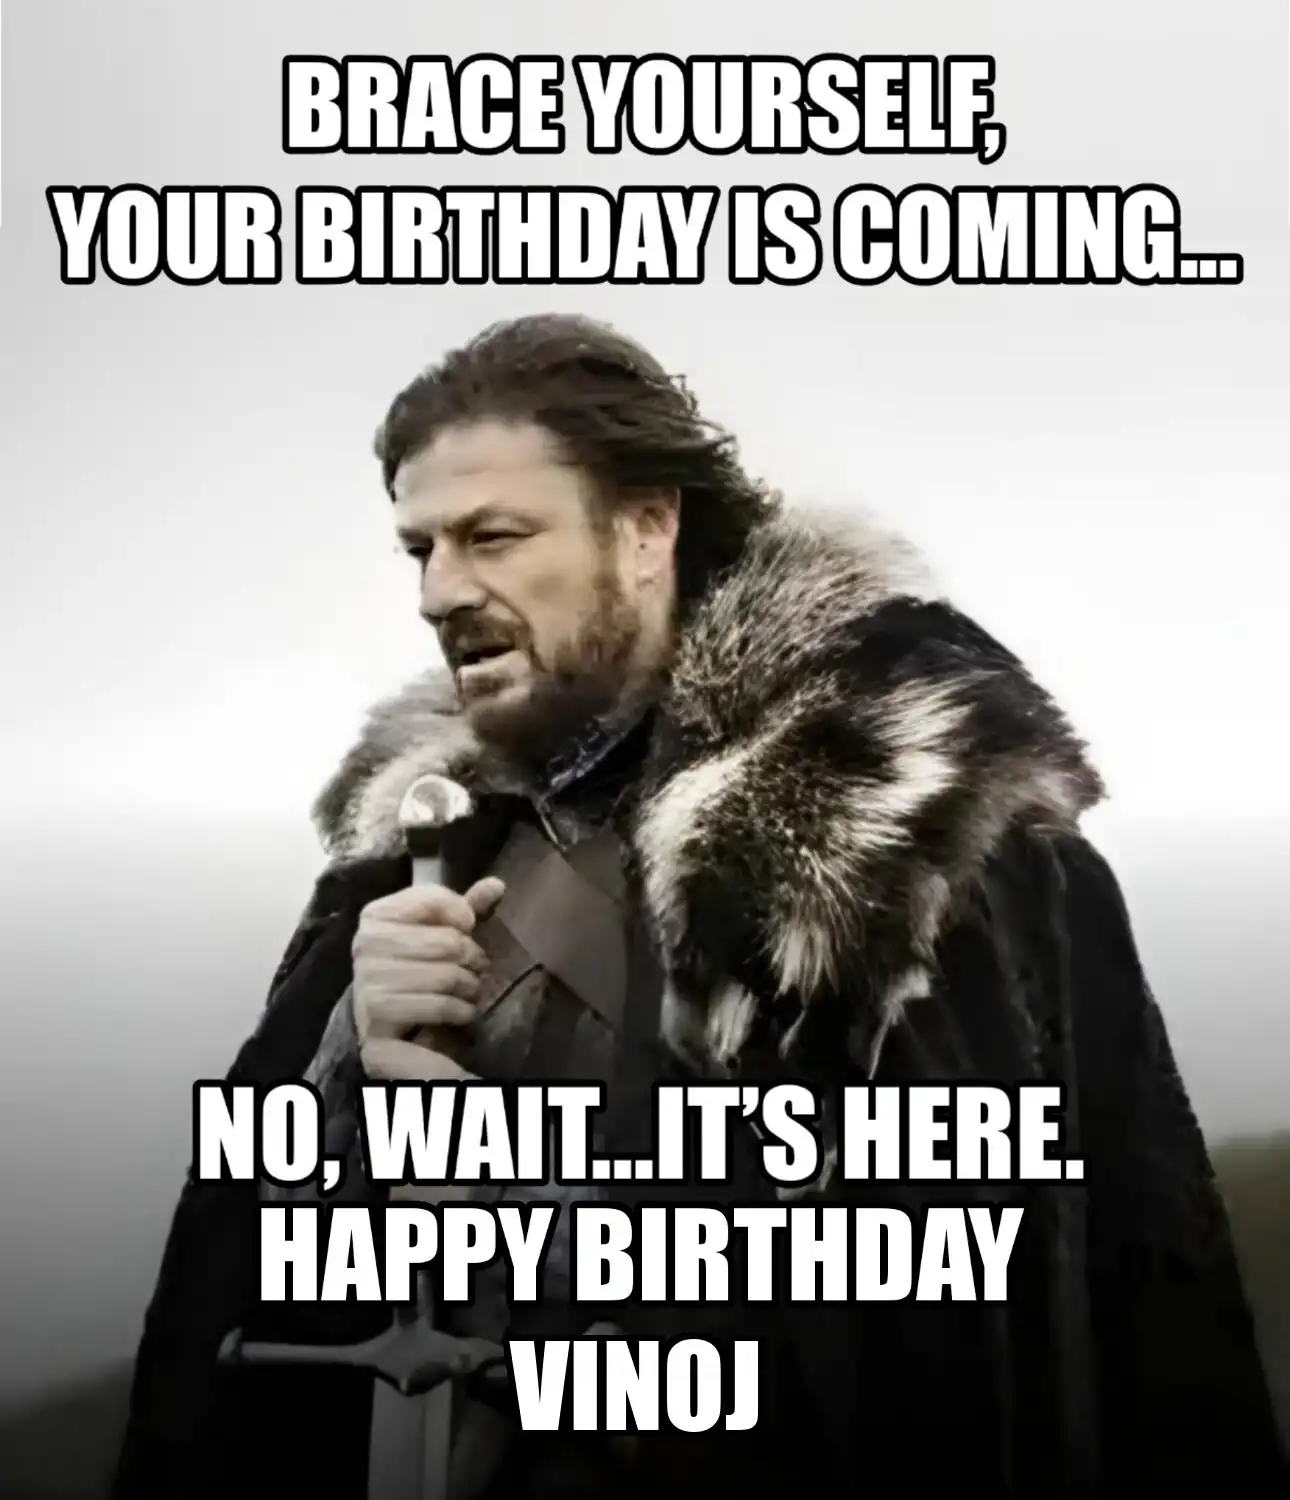 Happy Birthday Vinoj Brace Yourself Your Birthday Is Coming Meme